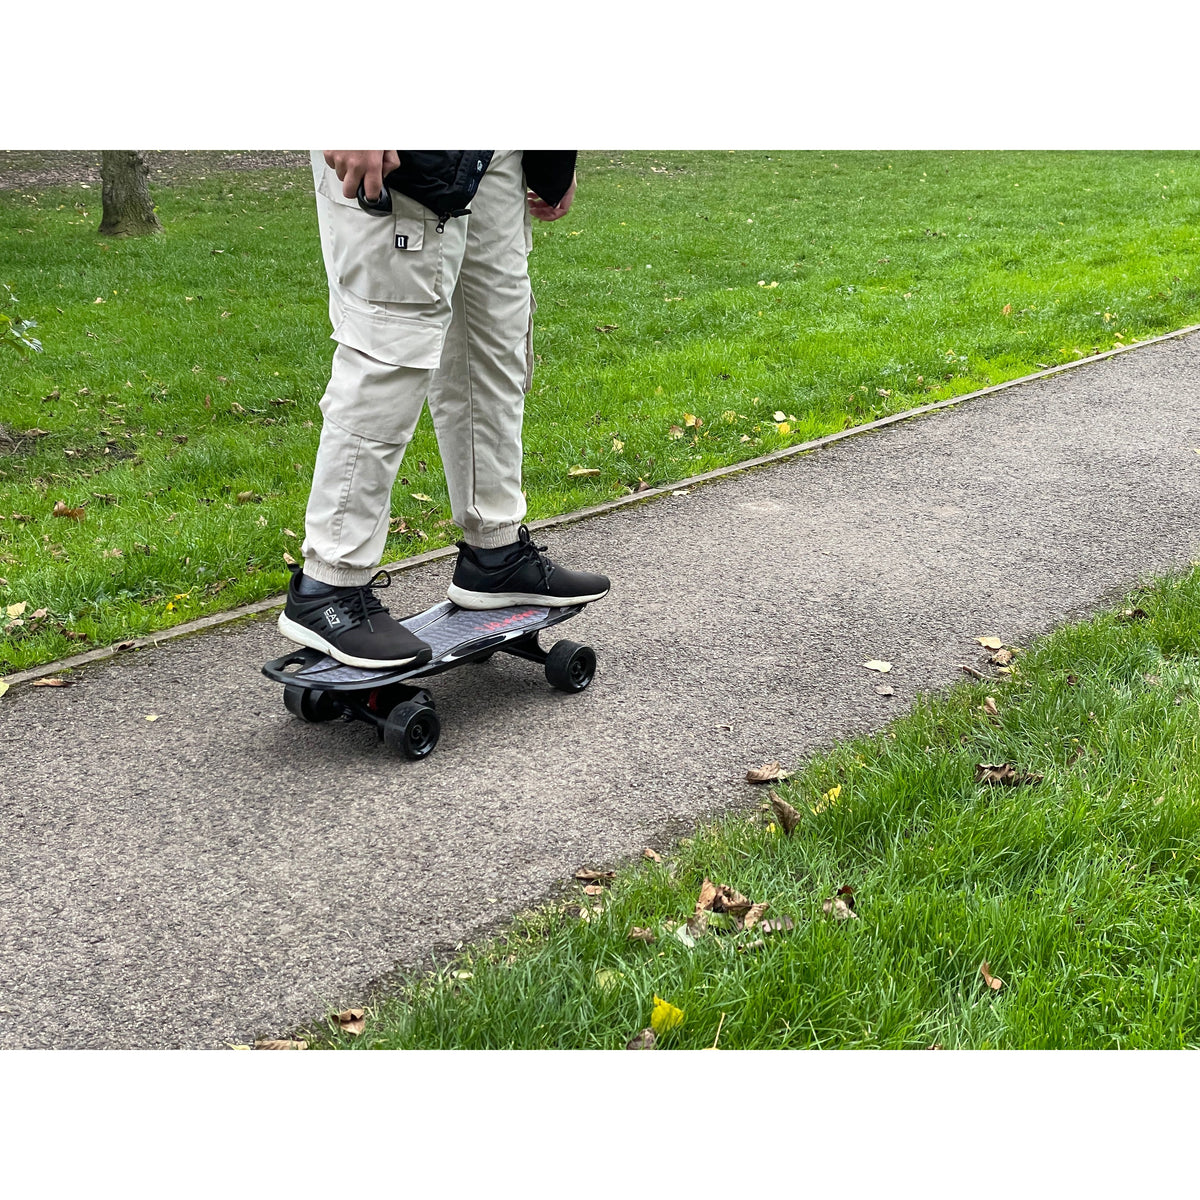 Venom – 900W*2 Dual-Motor Electric Skateboard (E-Board)